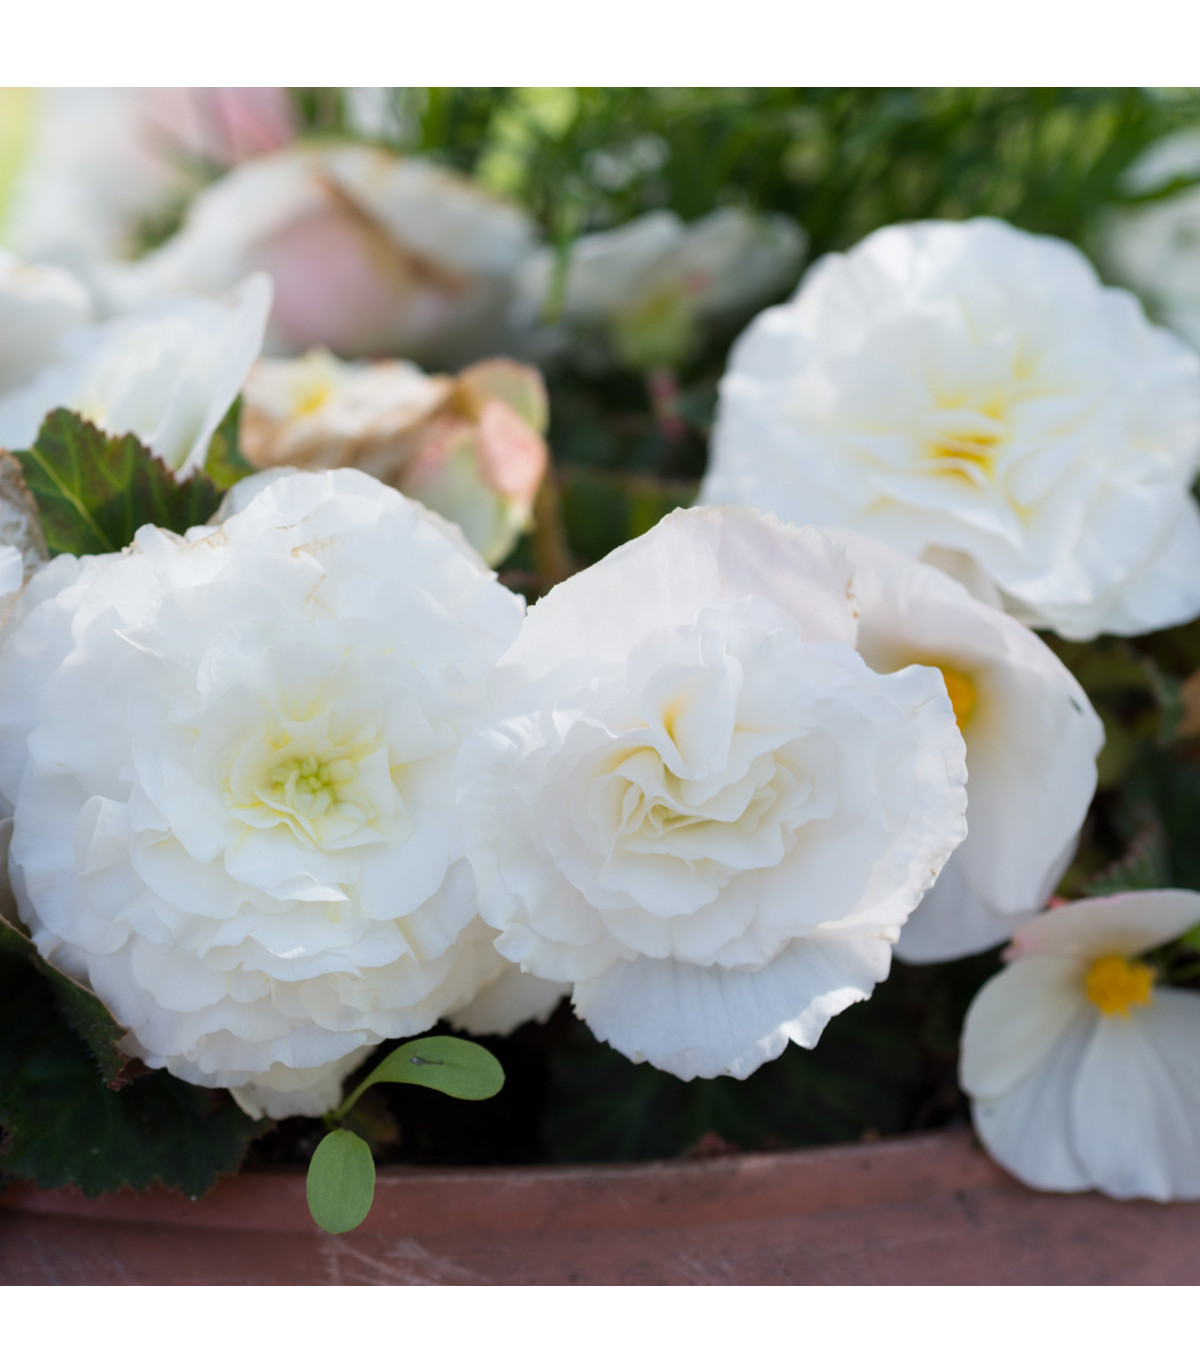 Begonie bílá třepenitá - Begonia fimbriata - hlízy begónií - 2 ks